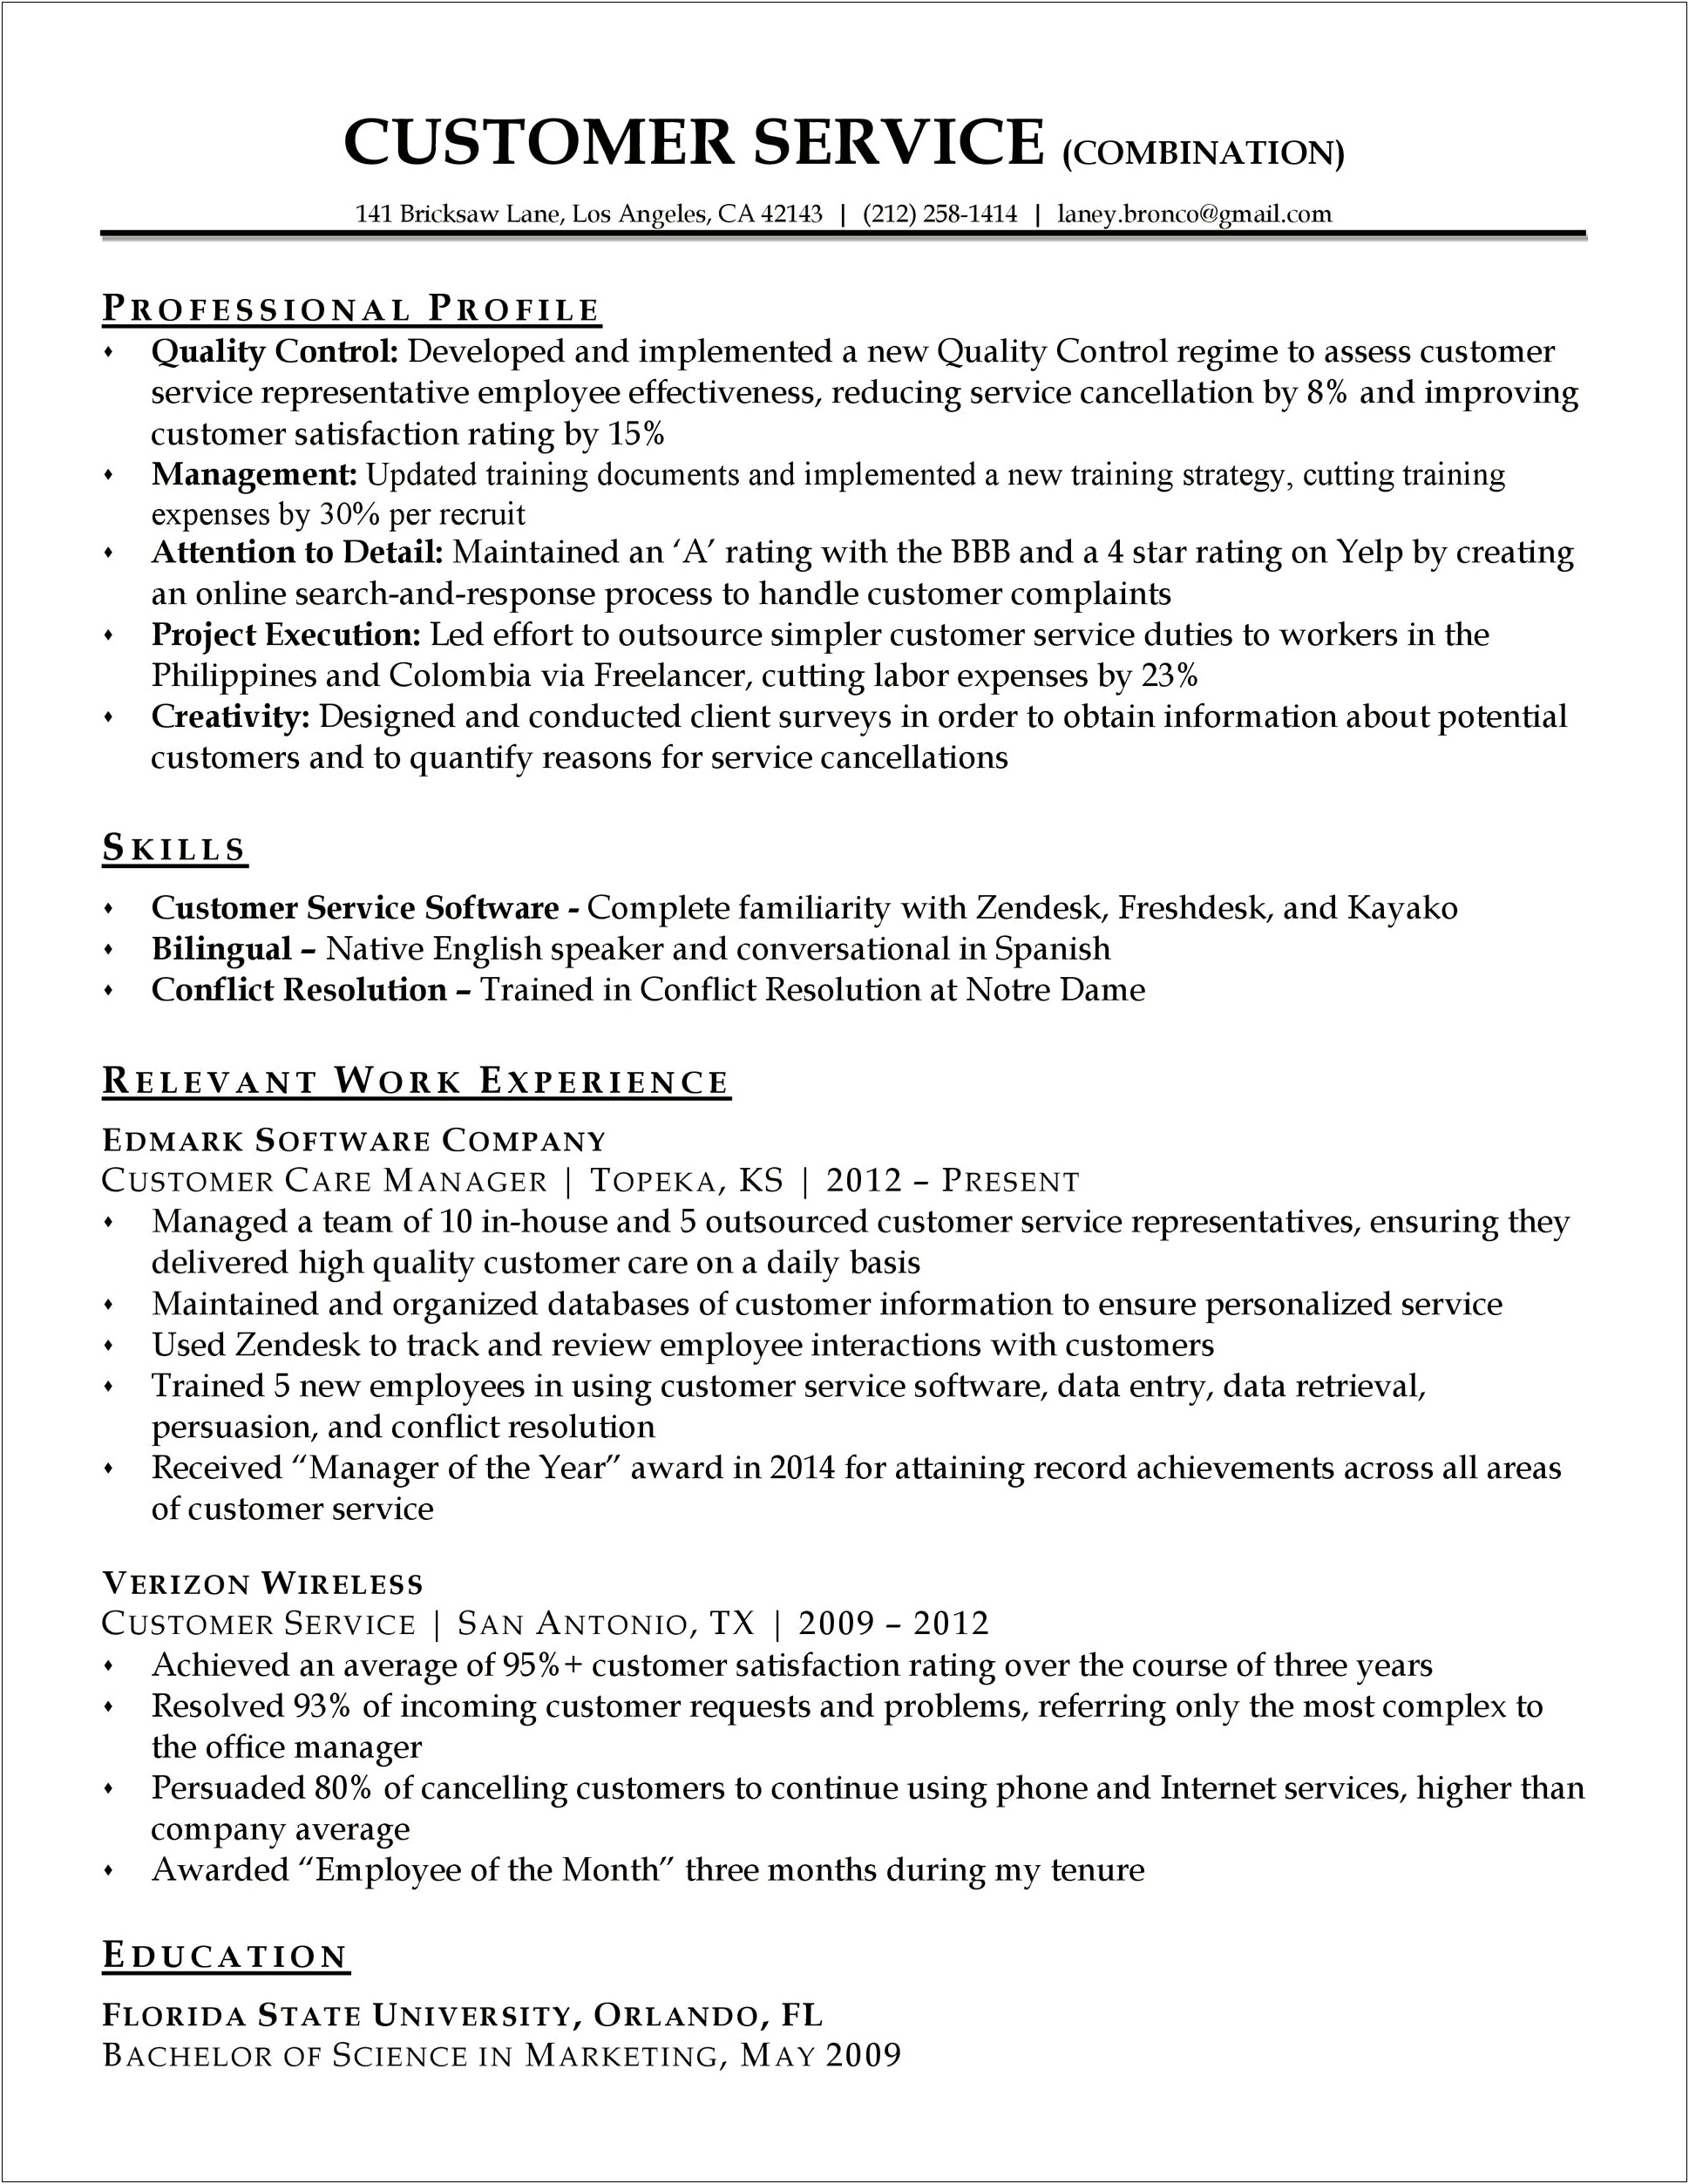 Verizon Field Technician Resume Example